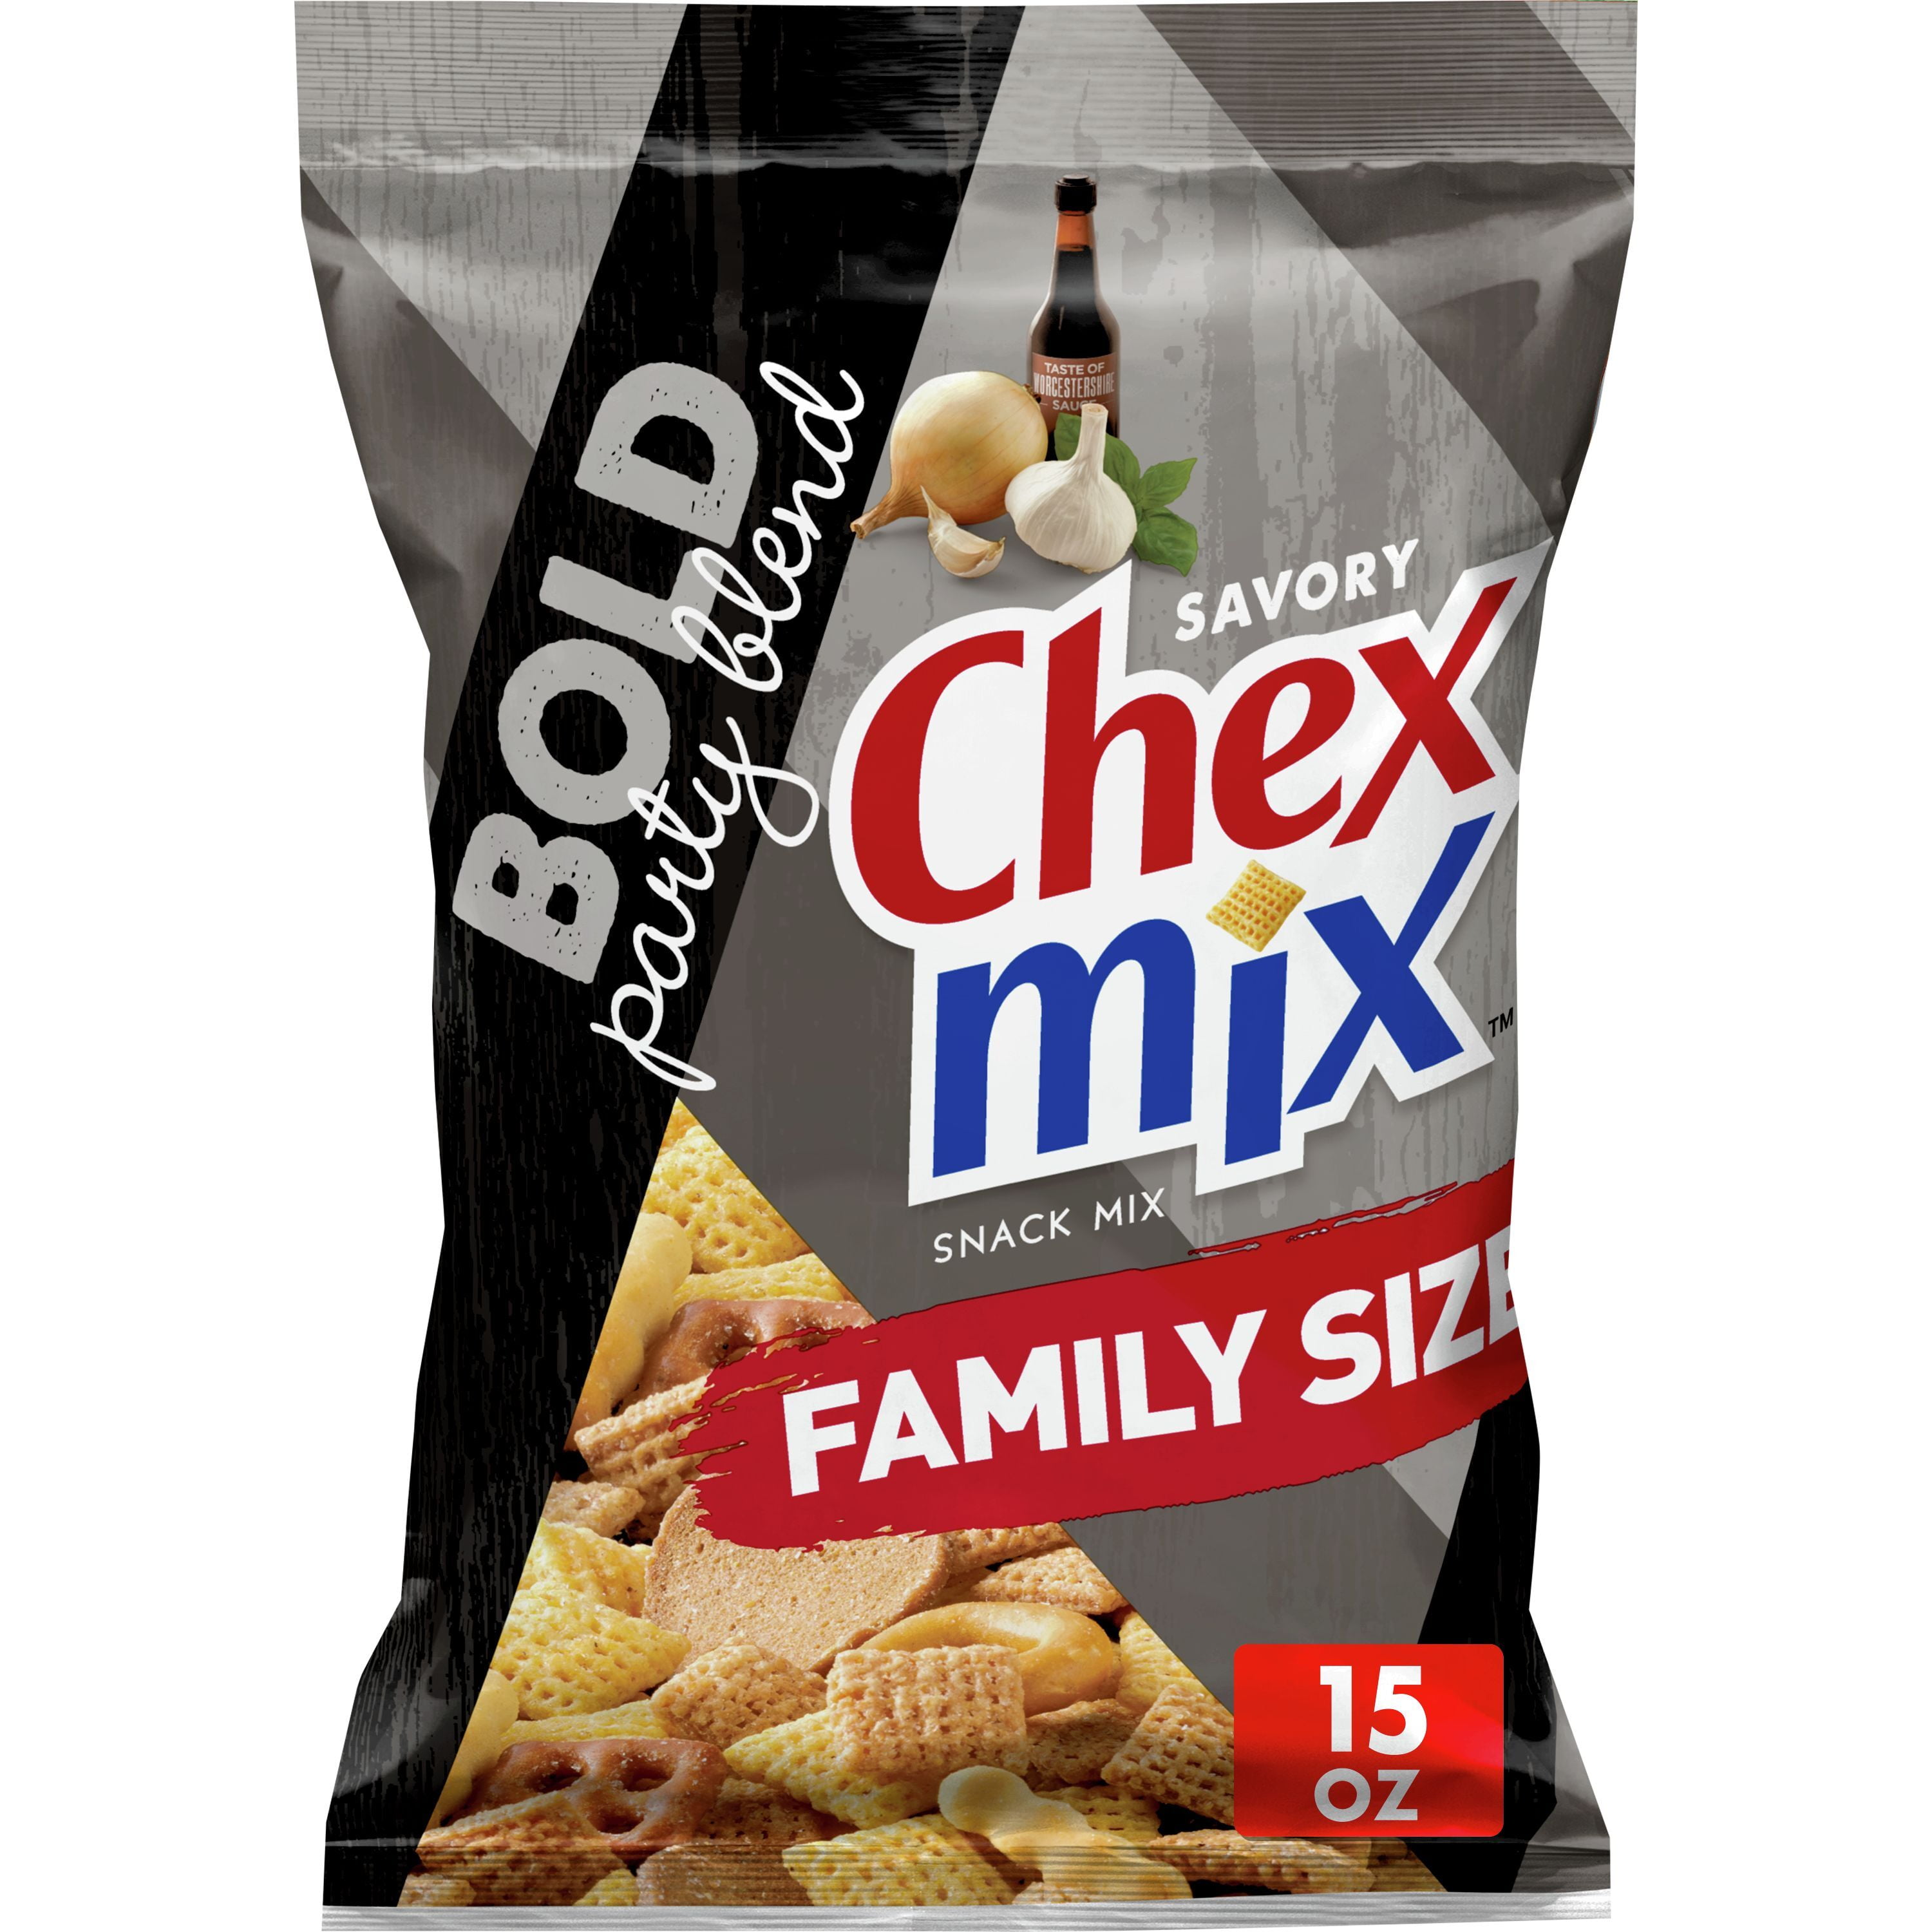 Chex Mix Snack Mix, Bold Party Blend, Savory Snack Bag, Family Size, 15 oz